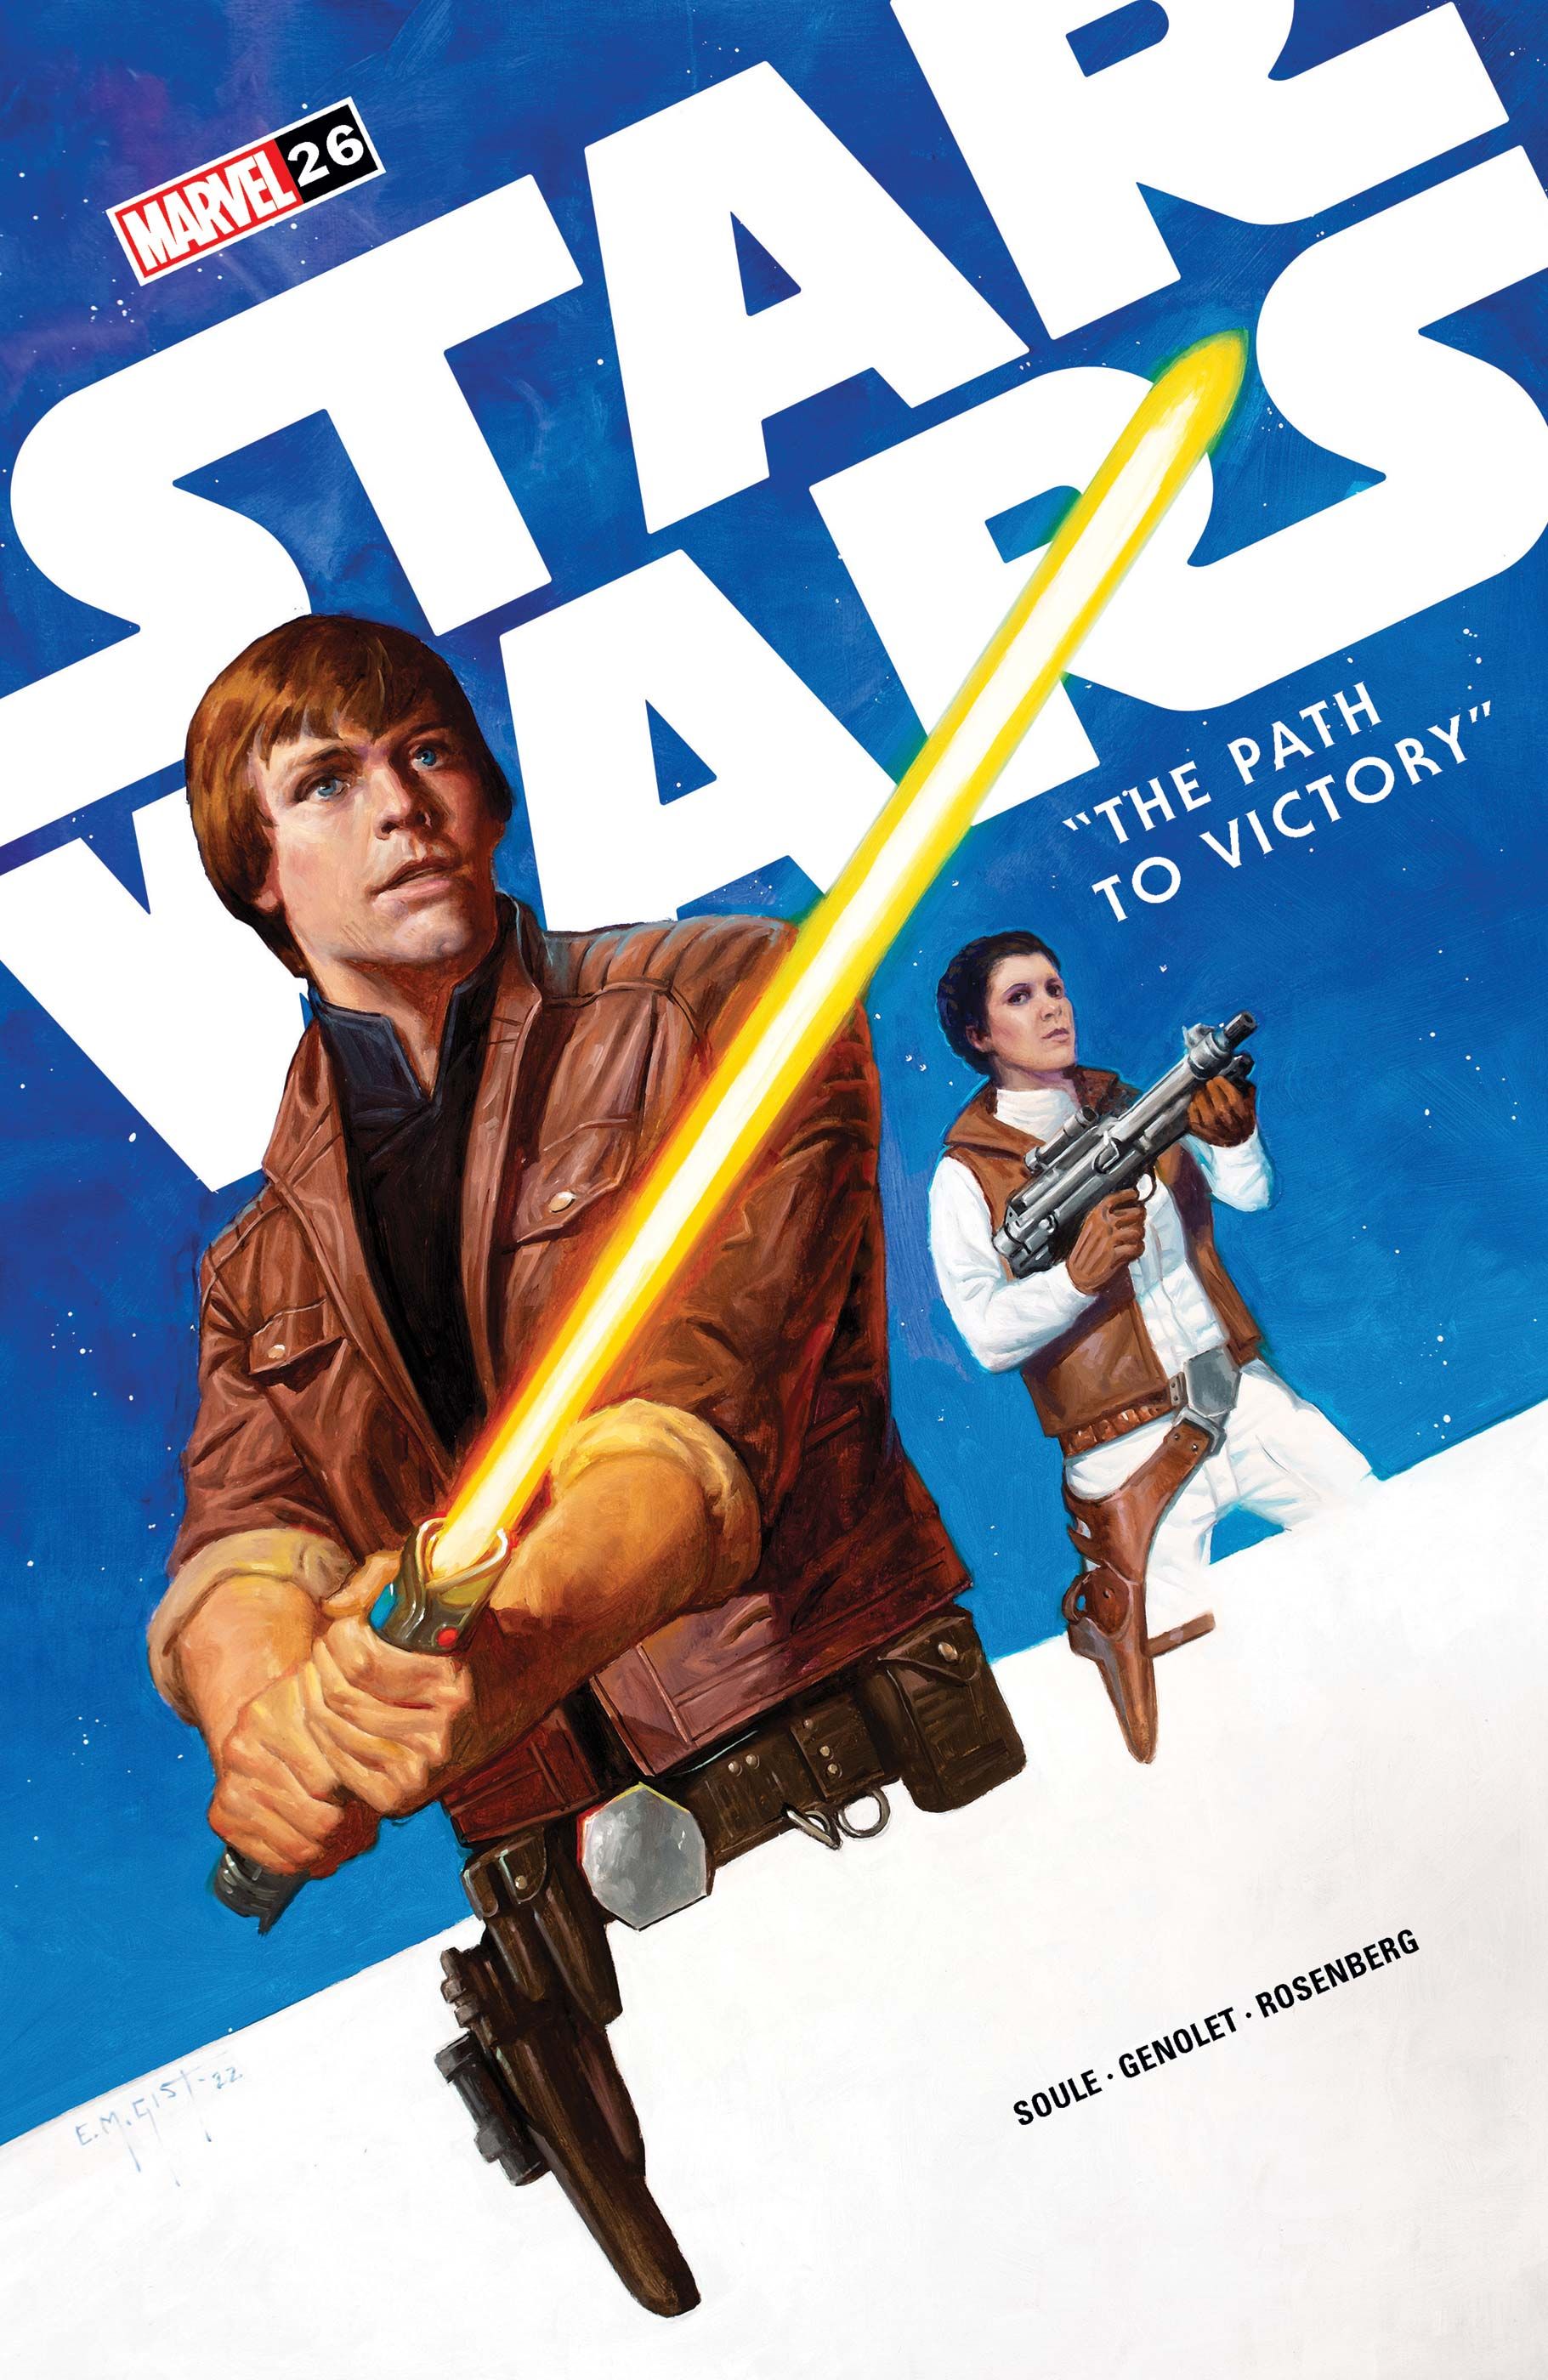 Star Wars #26 Comic